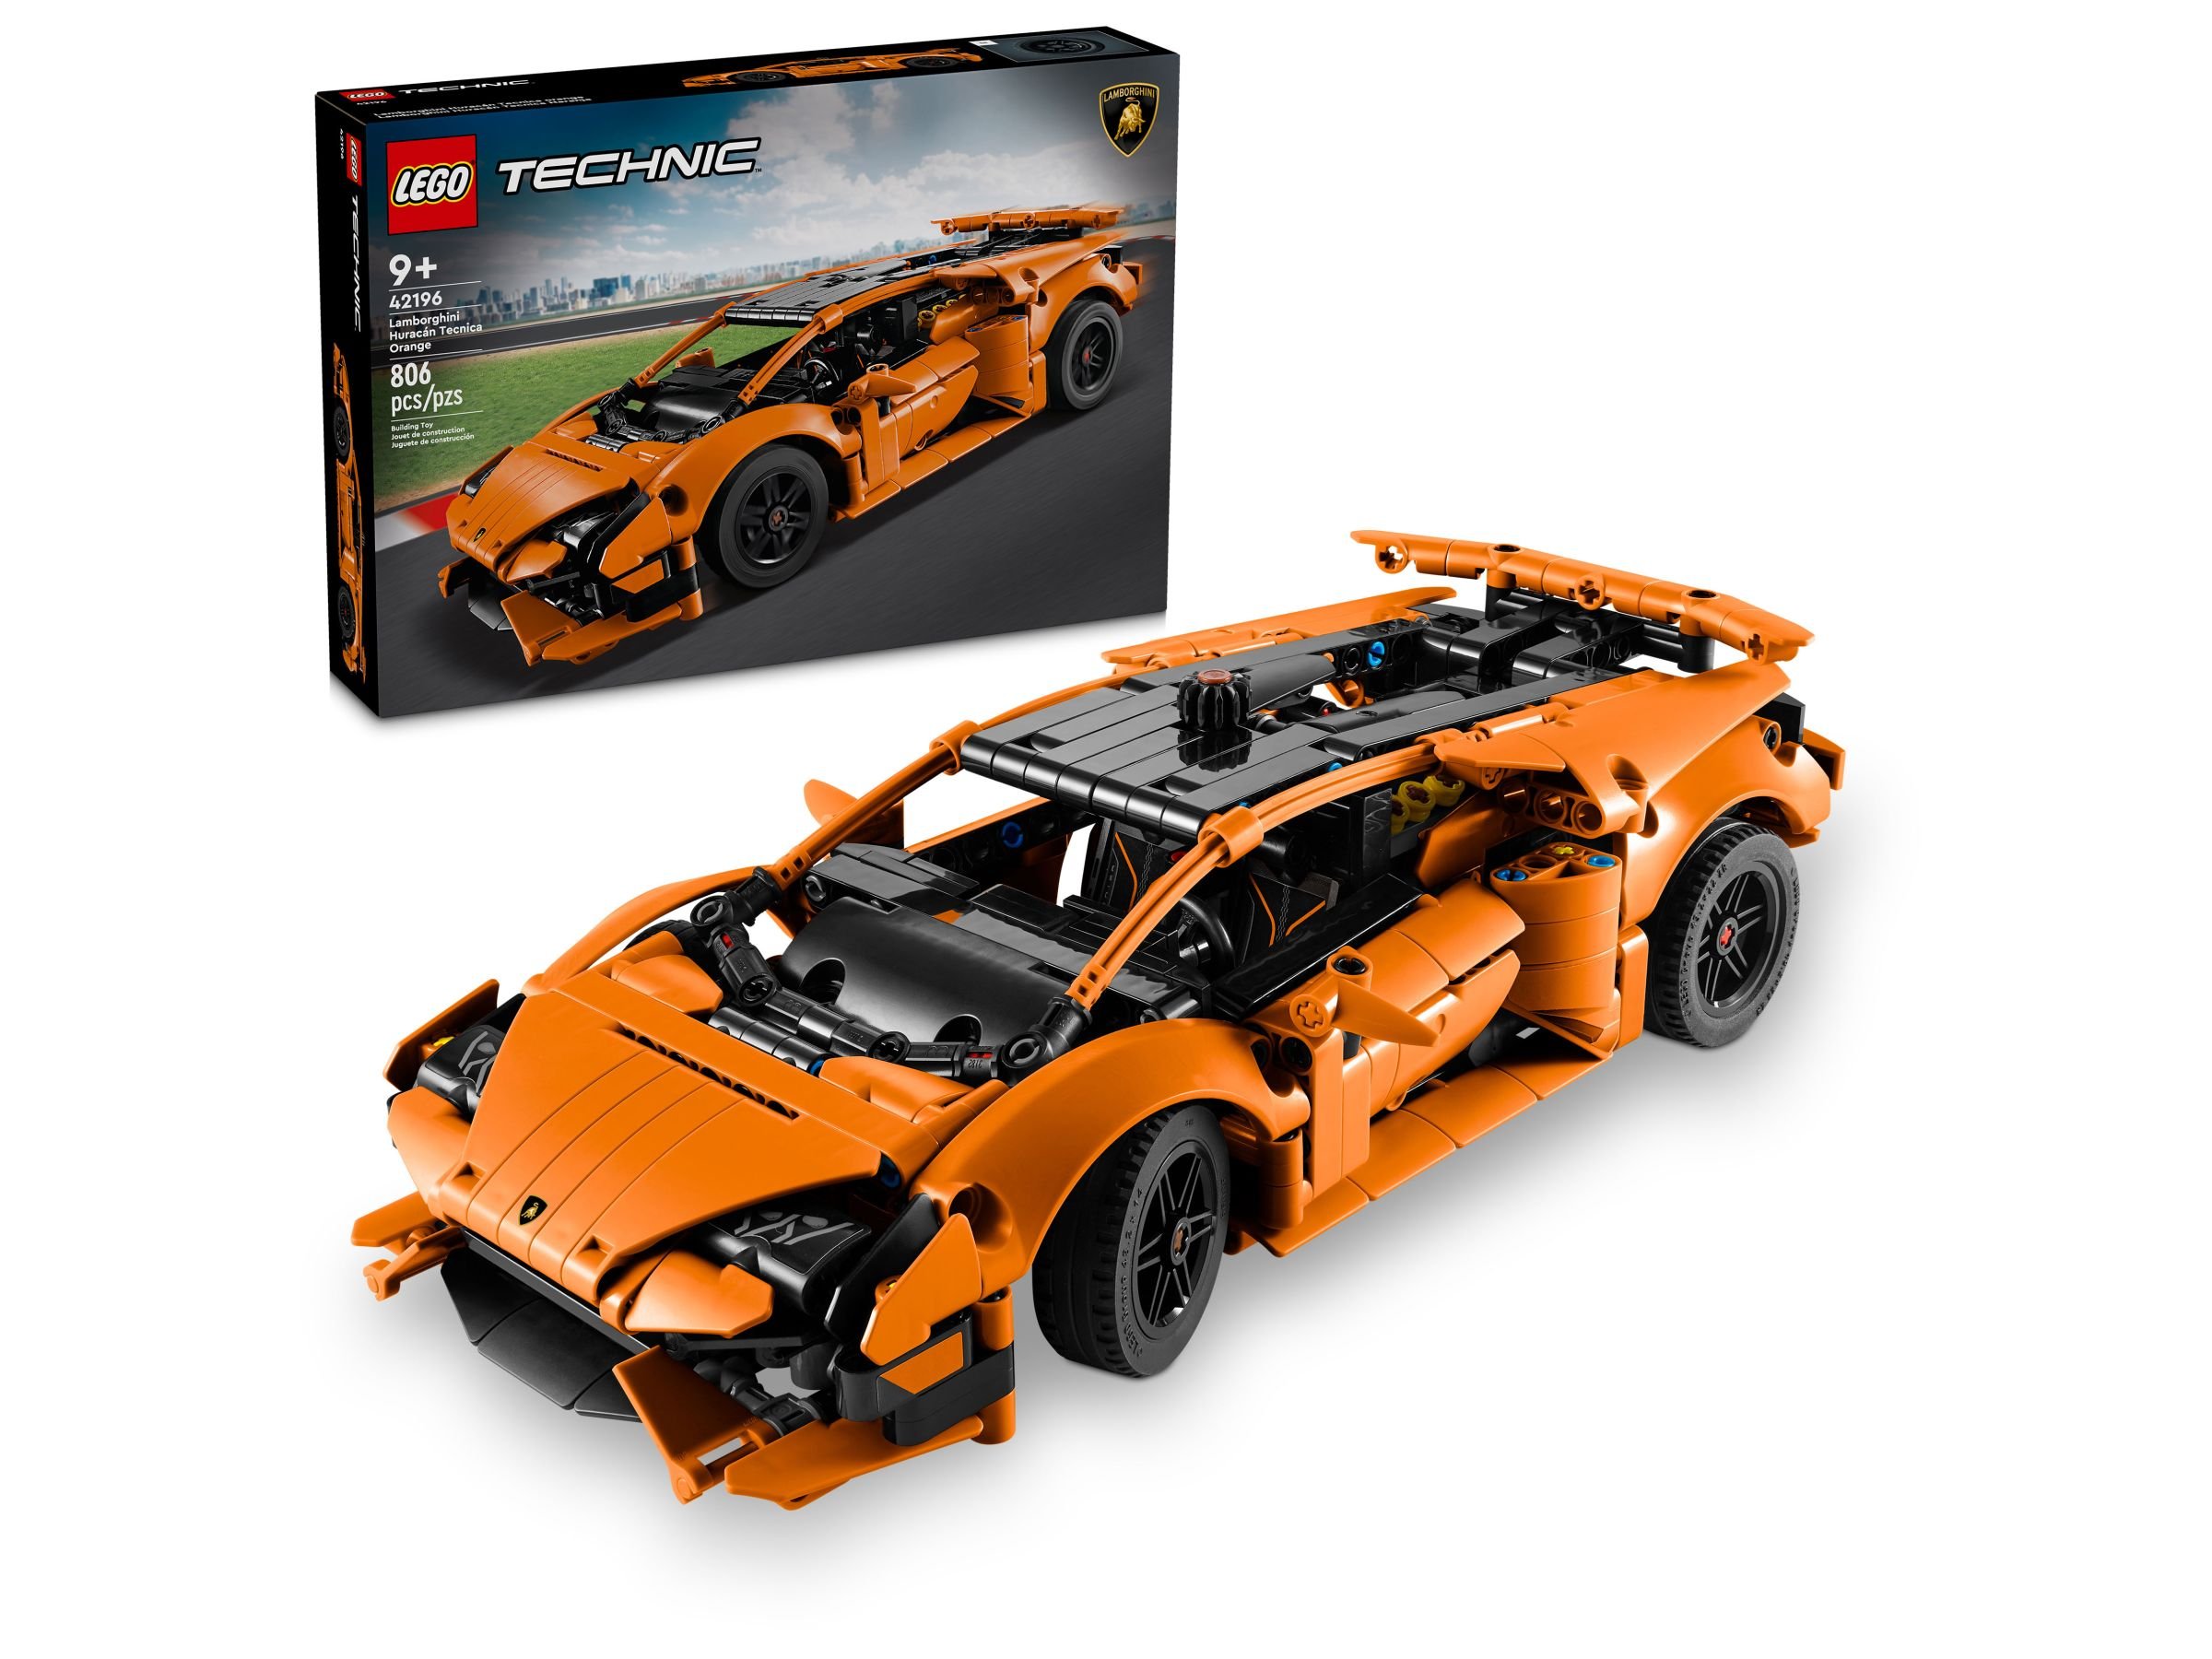 LEGO Technic 42196 Lamborghini Huracán Tecnica Orange LEGO_42196_alt1.jpg